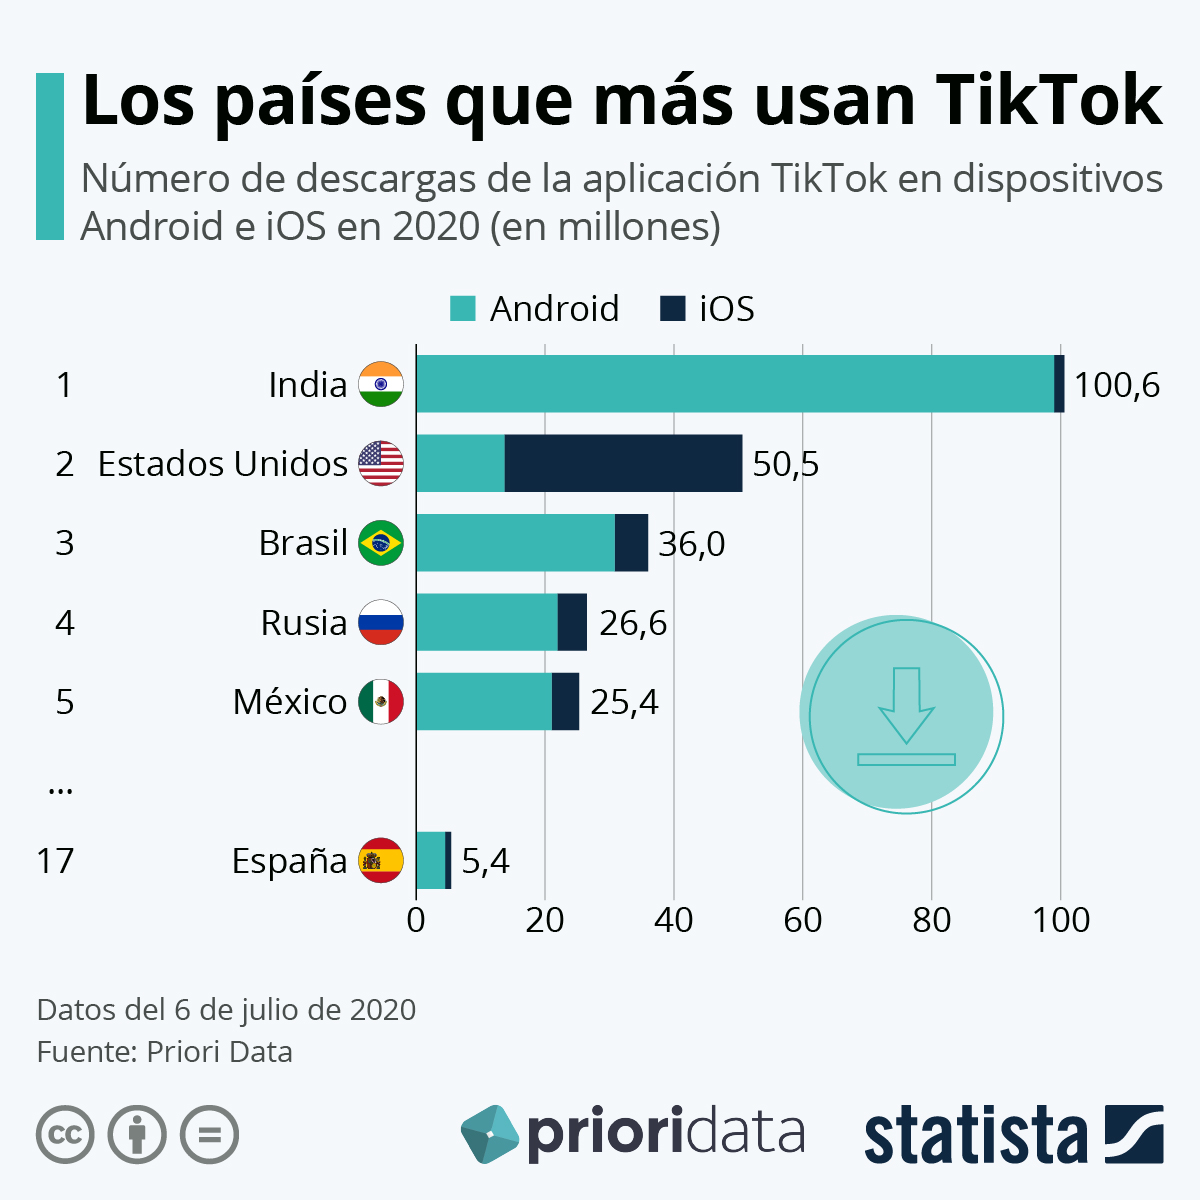 Los países que más usan TikTok #infografia #infographic #socialmedia